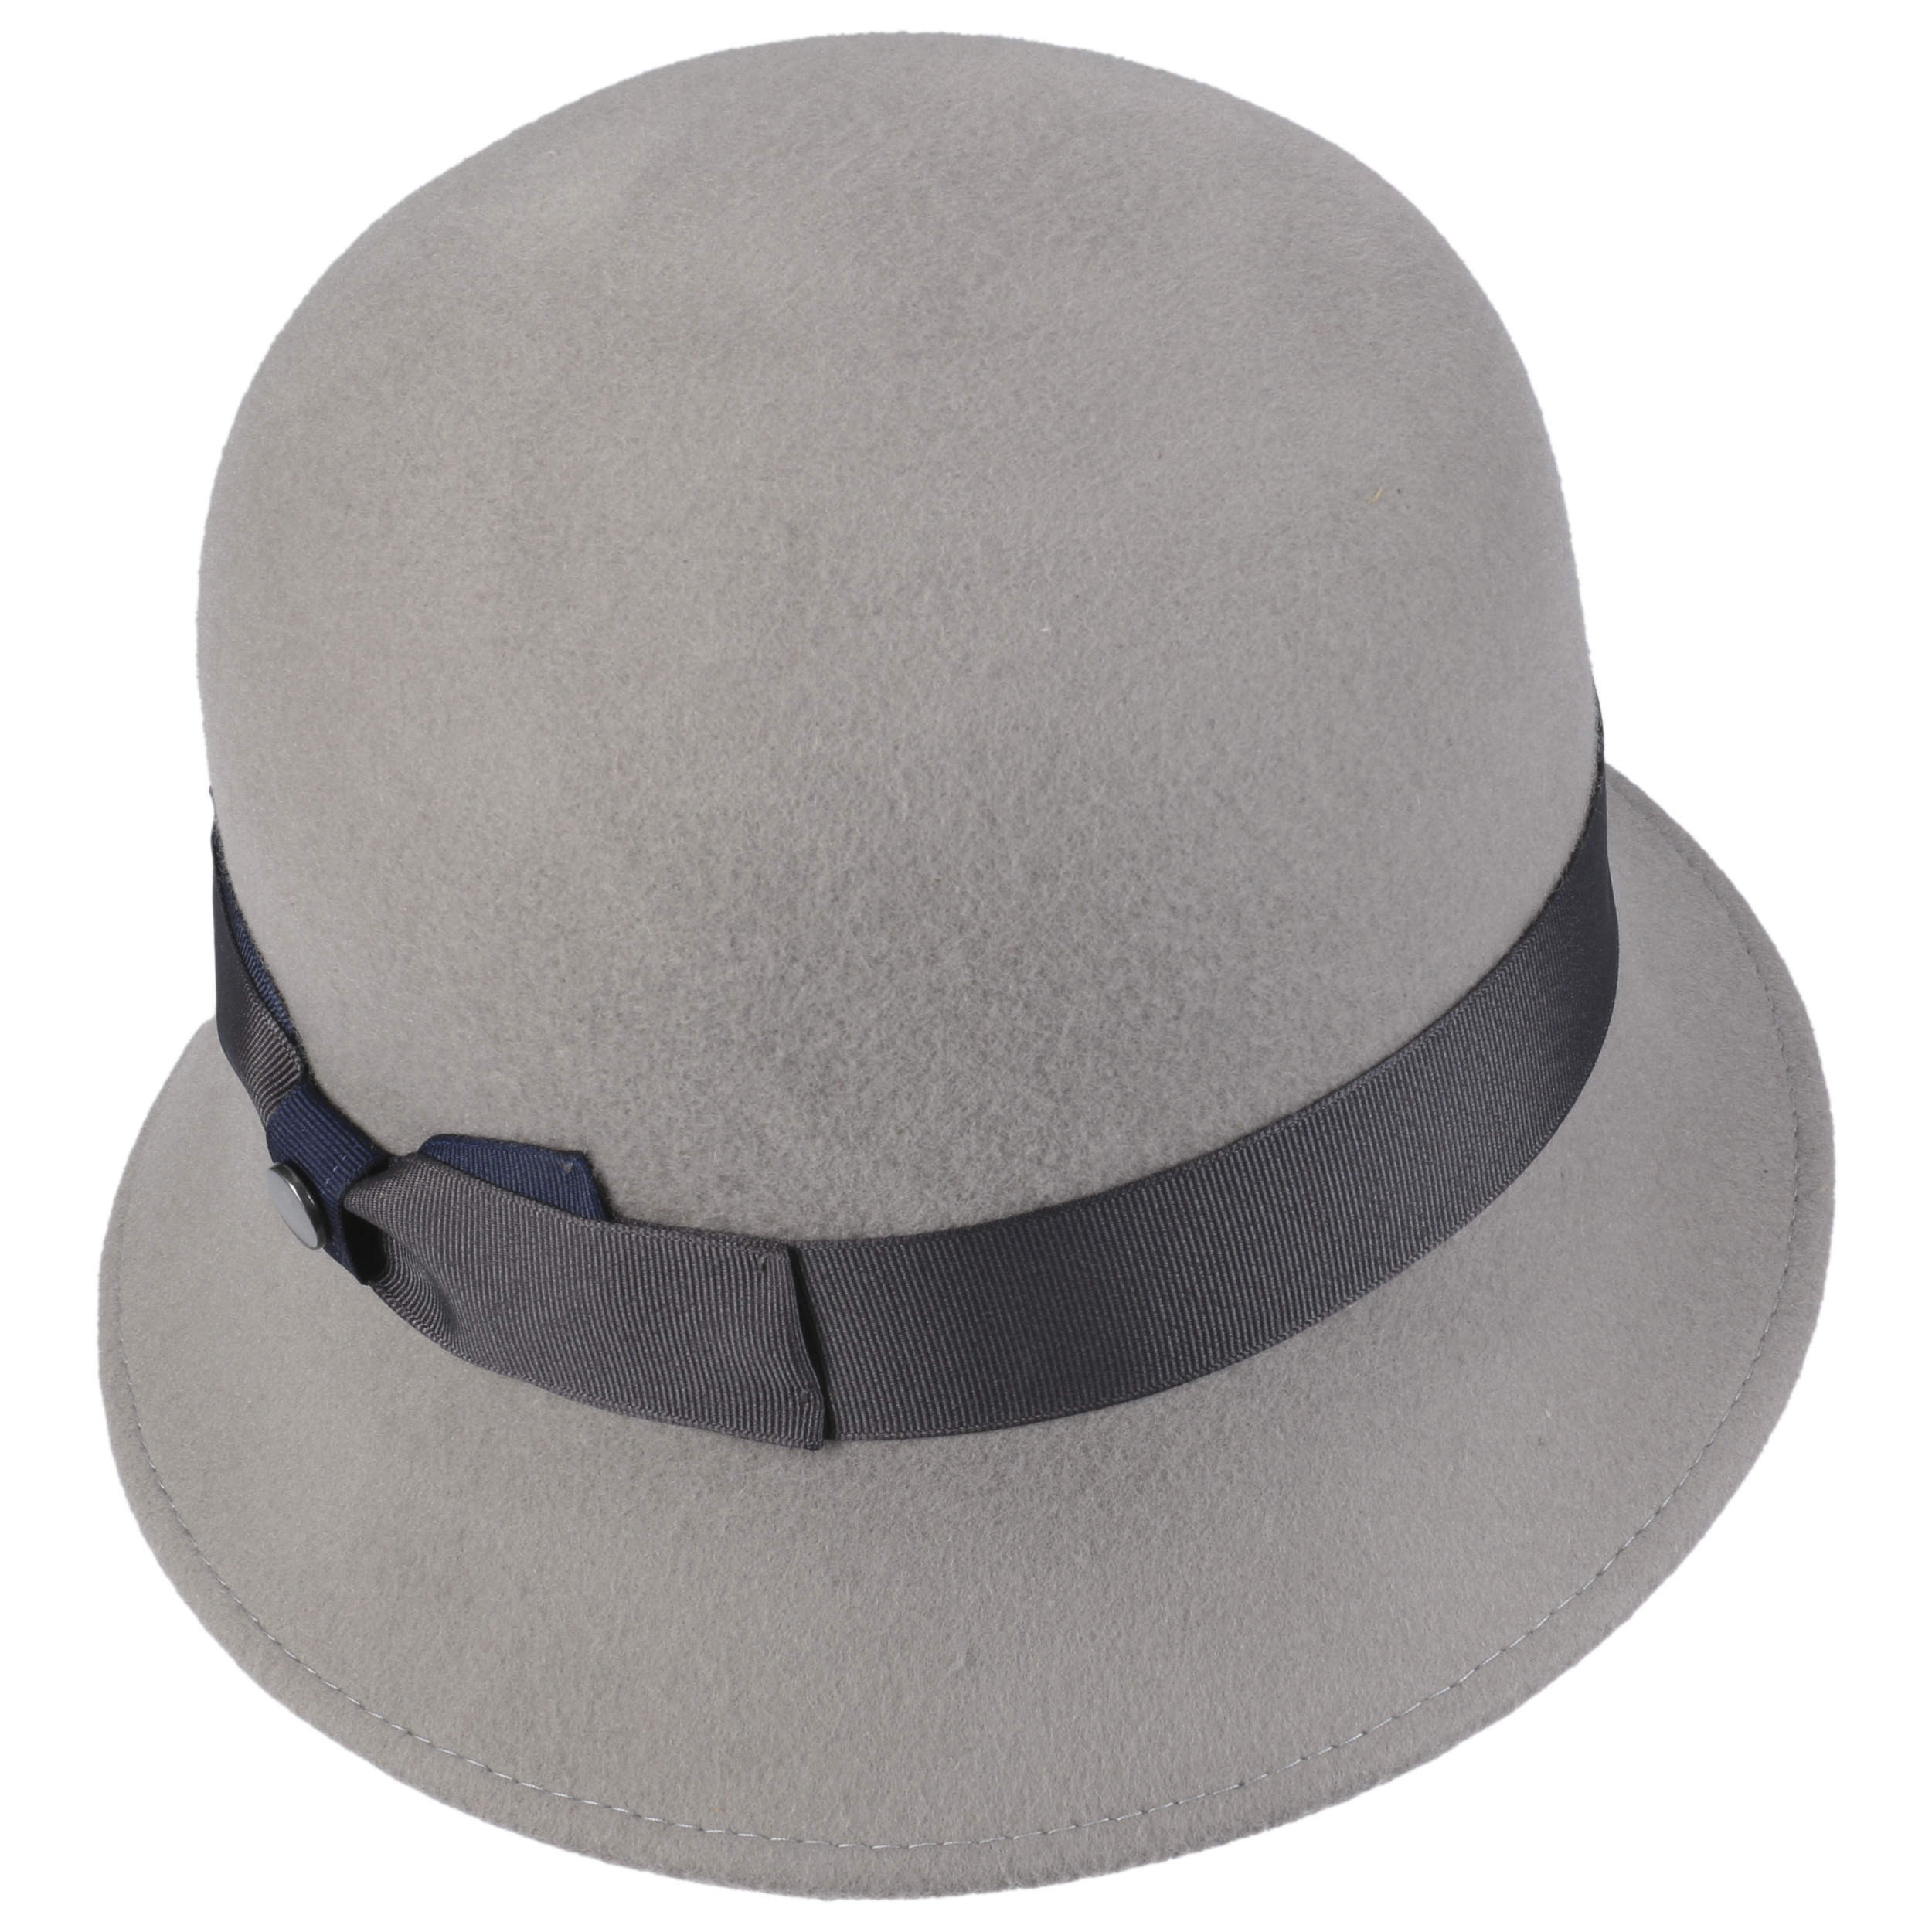 Rode Cloche-stijl gebreide hoed Accessoires Hoeden & petten Nette hoeden Cloche hoeden 